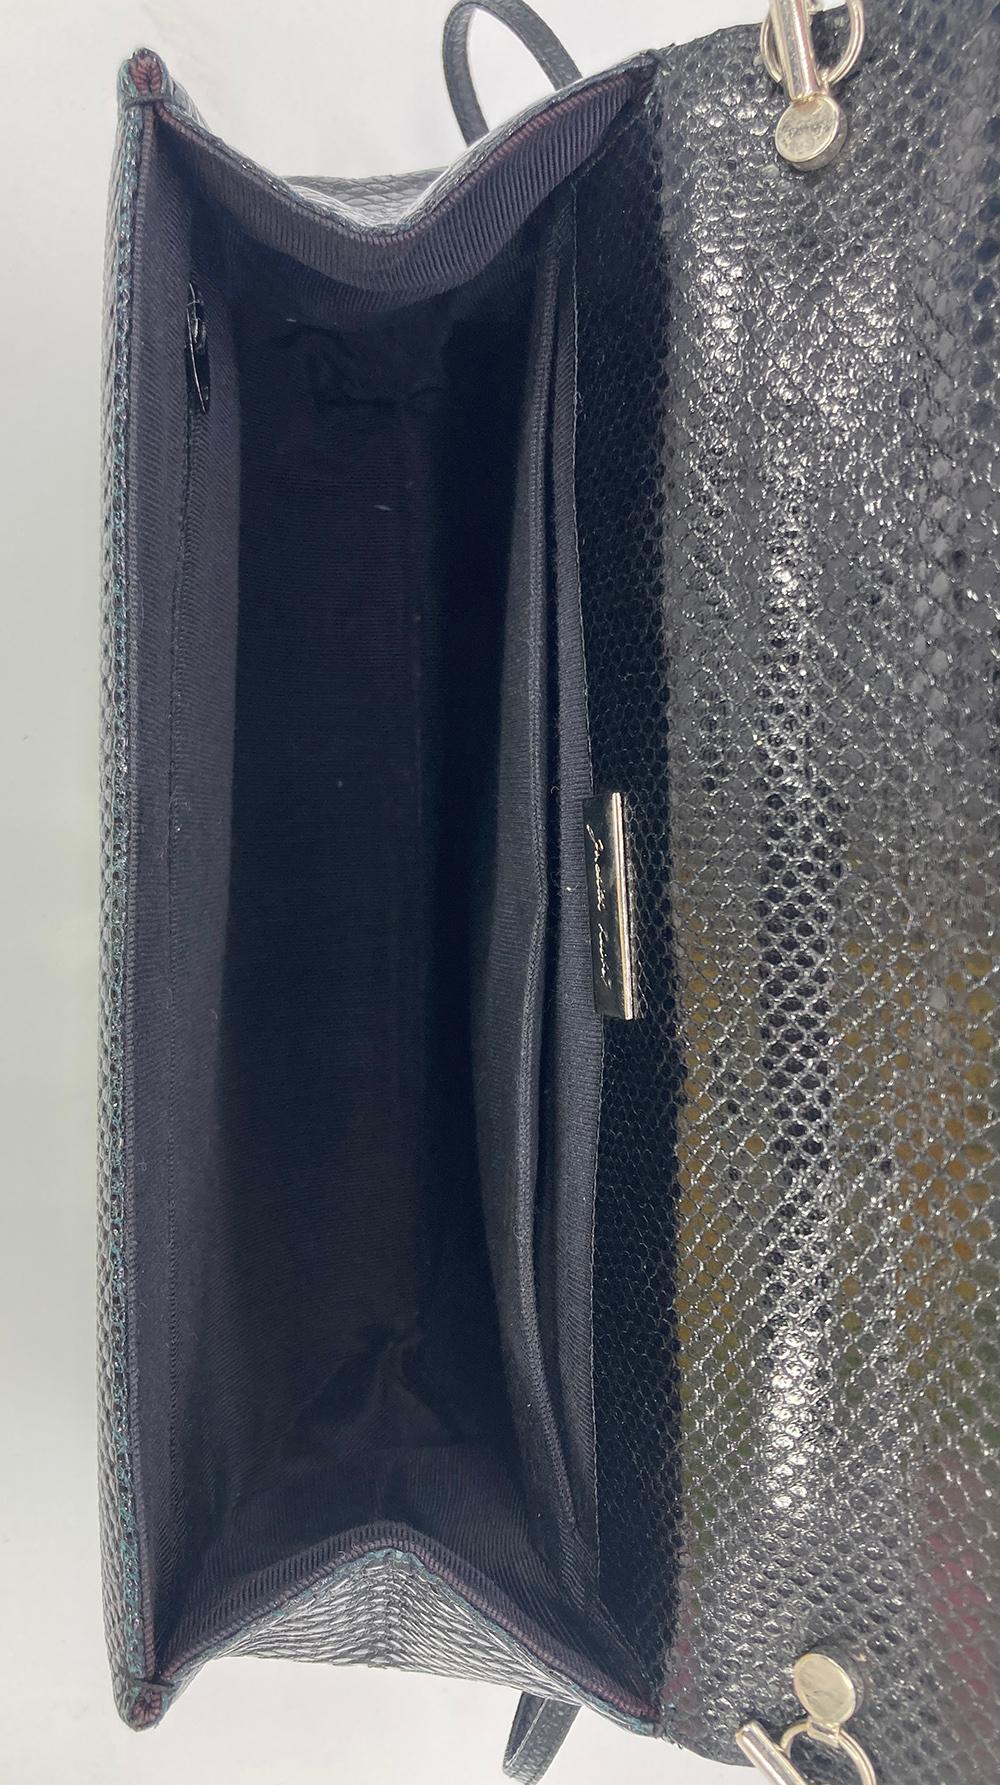 Judith Leiber Black Lizard Top Flap Bag For Sale 3